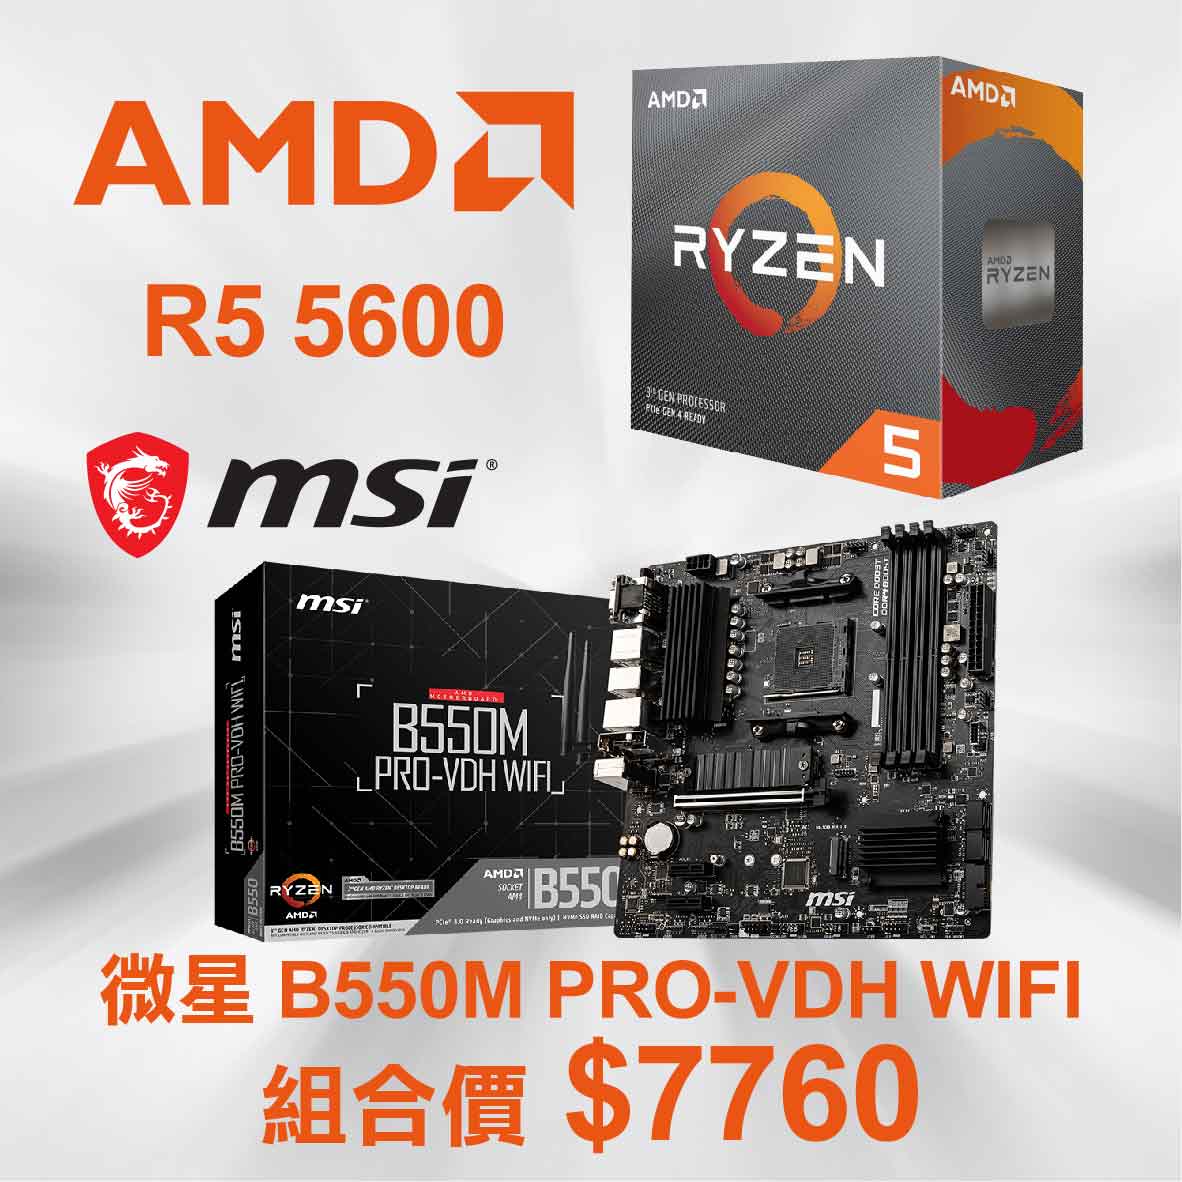 霐道電腦-【HD數位3C】 - R55600-B550MPROW AMD R5 5600微星B550M PRO